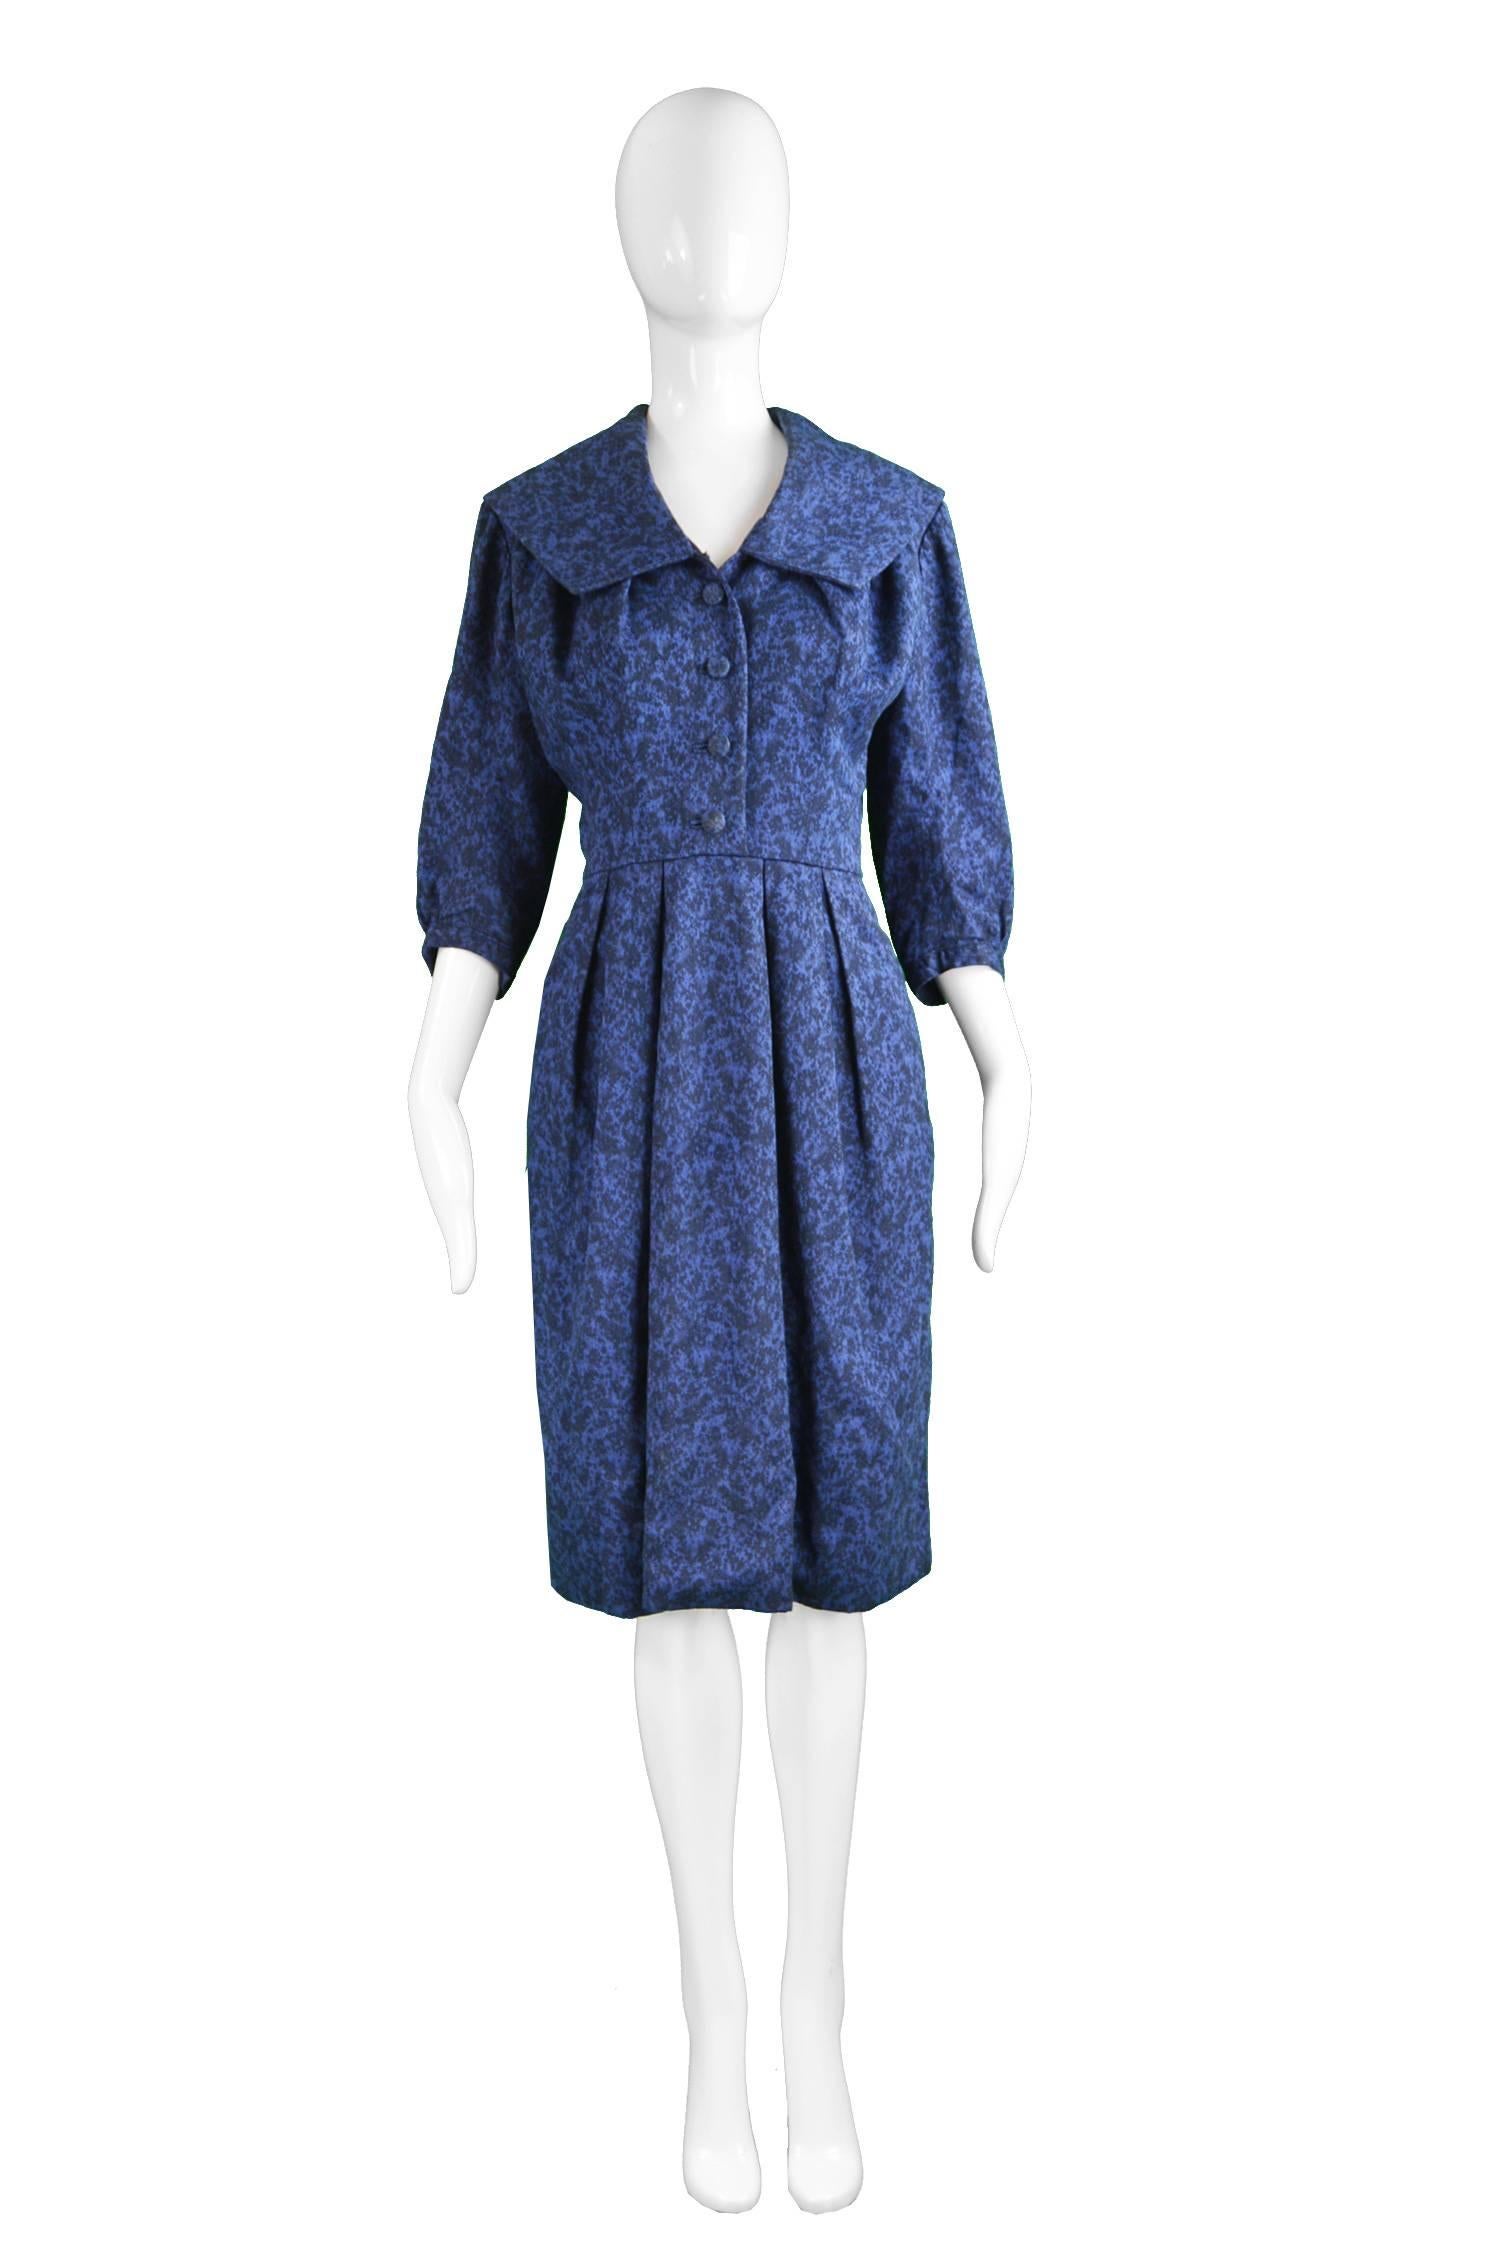 Christian Dior Vintage Blue & Black Wide Sailor Collar Dress, 1950s

Please Click +CONTINUE READING to see measurements, description and condition. 

Estimated Size: UK 8-10/ US 4-6/ EU 36-38. Please check measurements.
Bust - up to 38” / 96cm